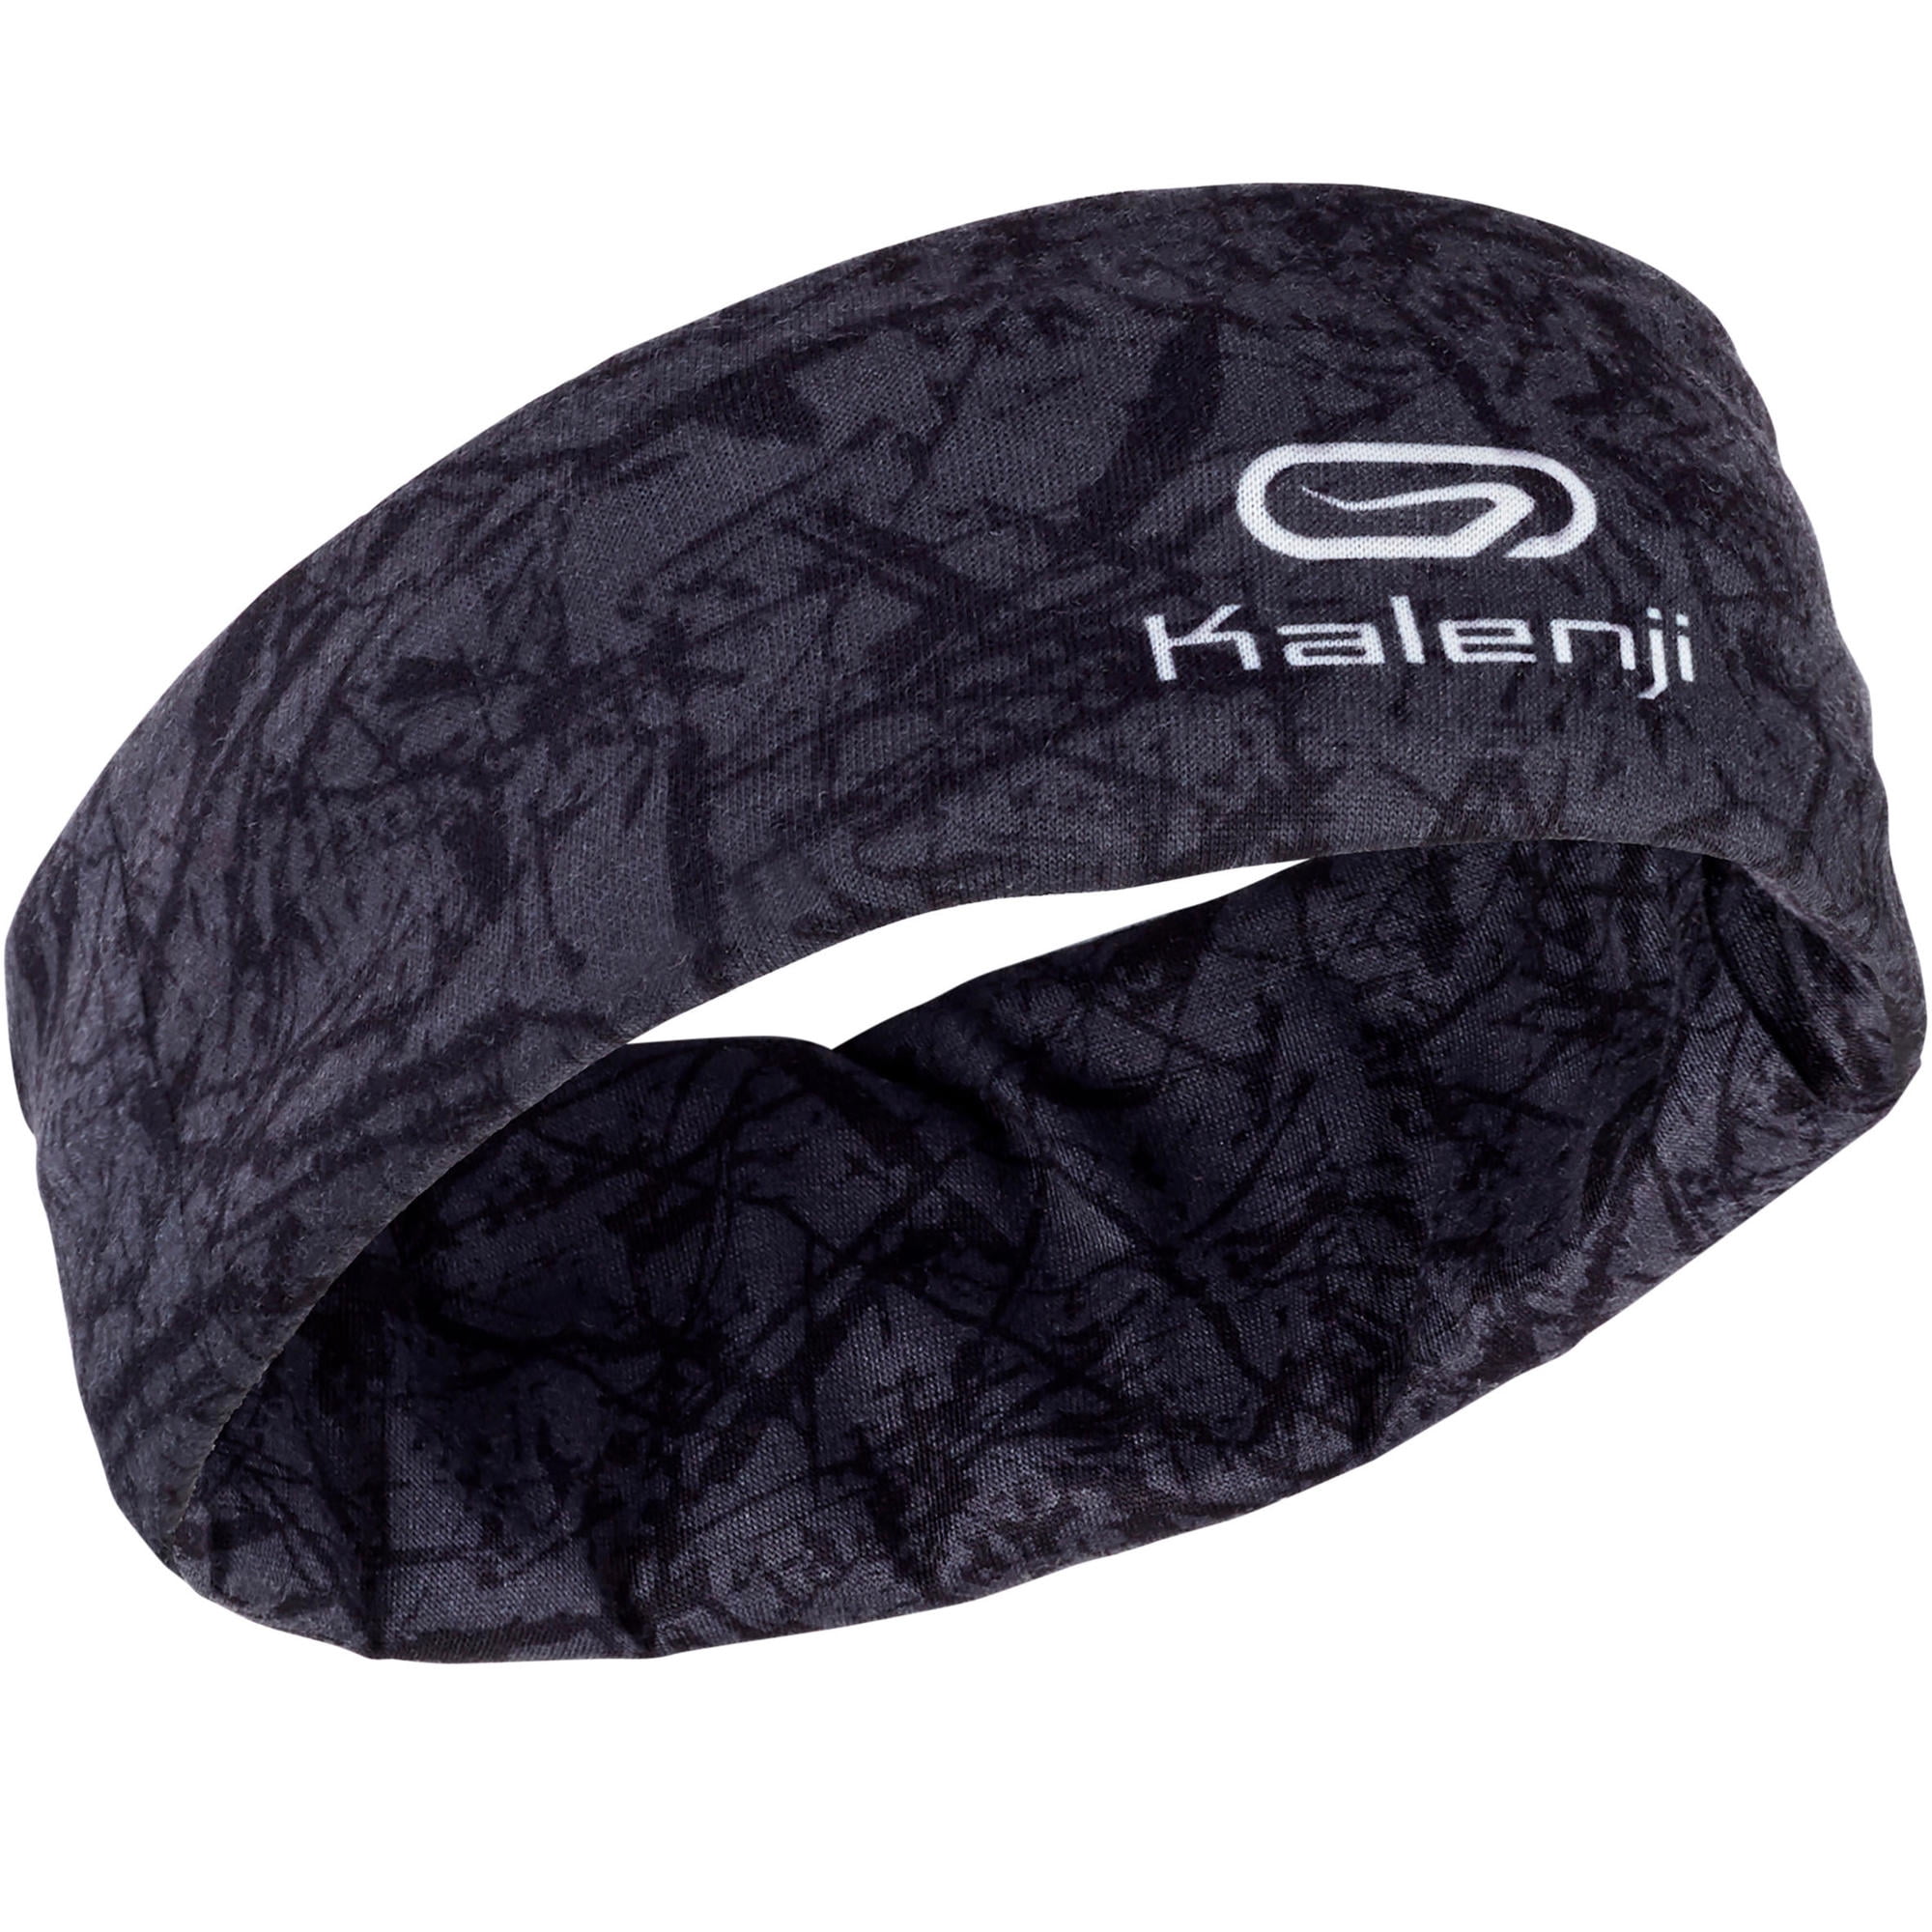 kalenji running headband